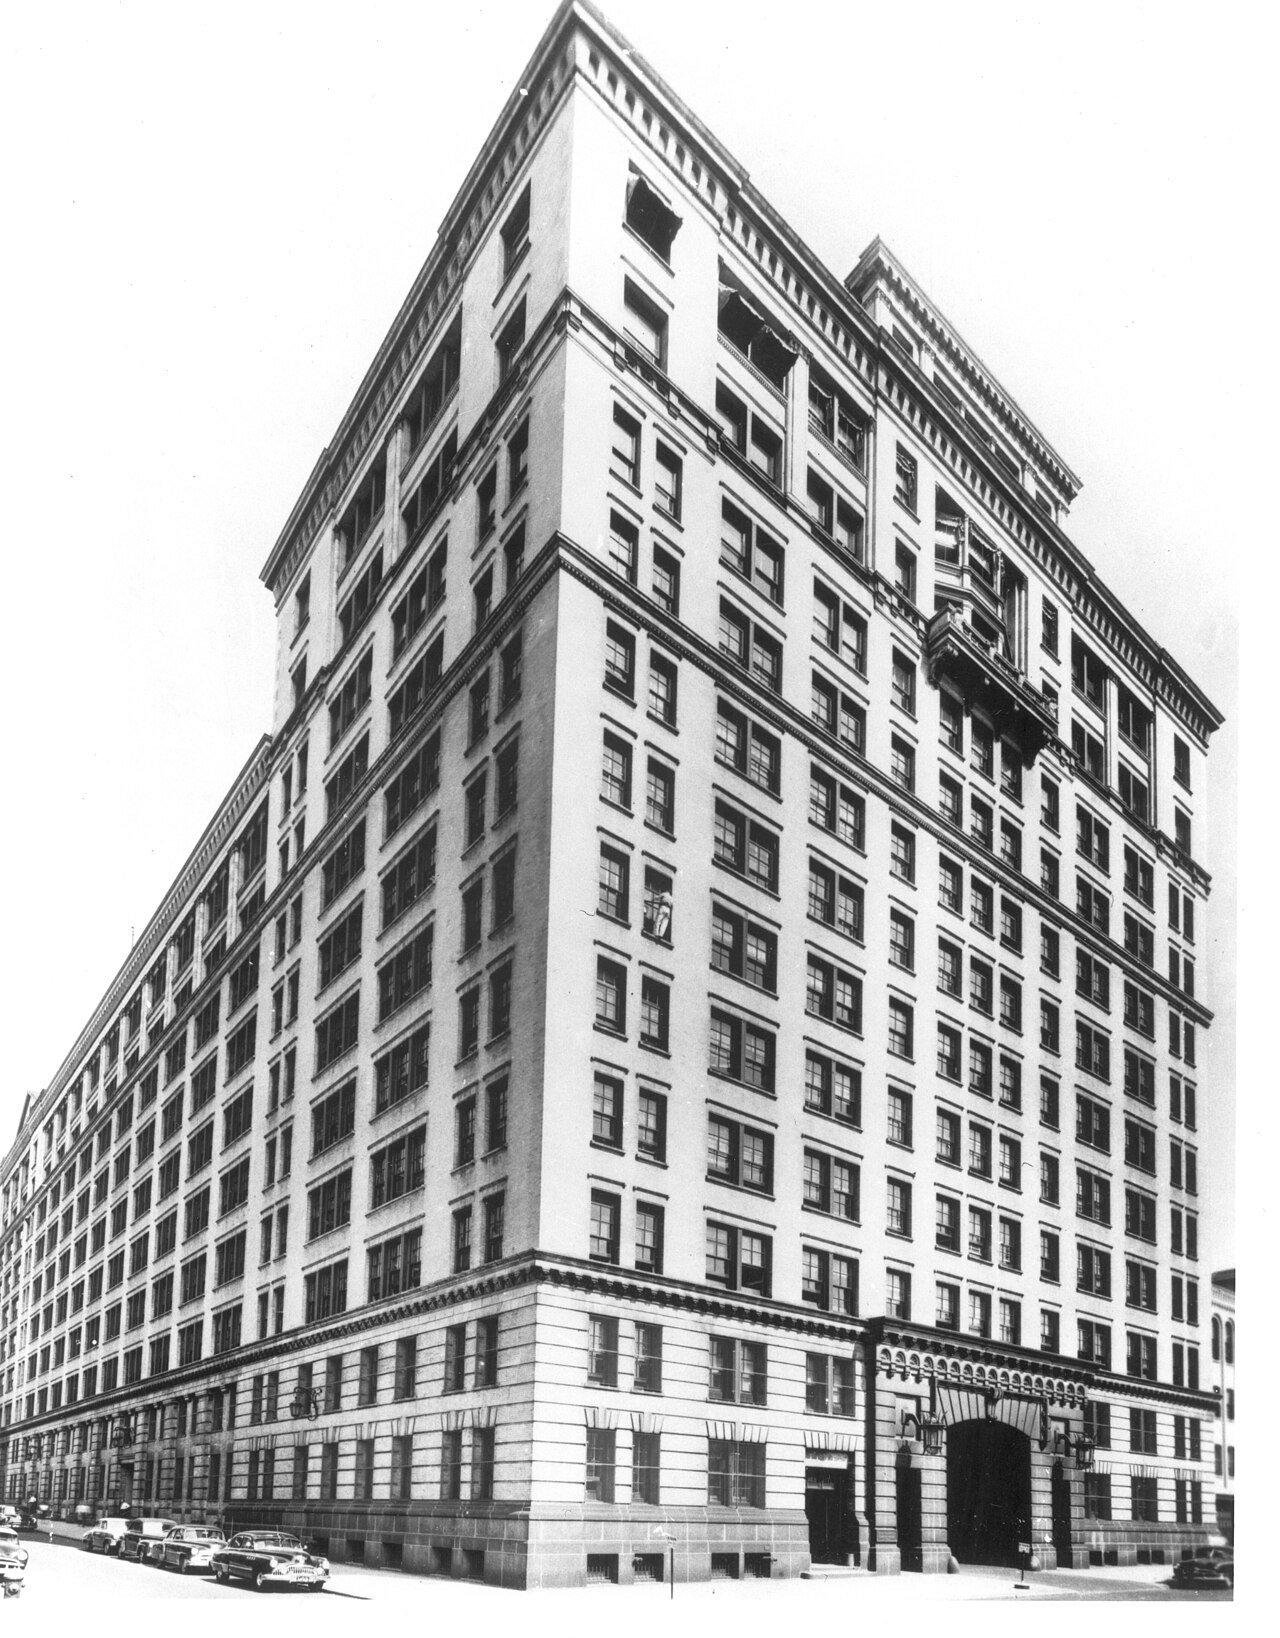 El hogar original de Bell Laboratories a partir de 1925, 463 West Street, Nueva York..jpg